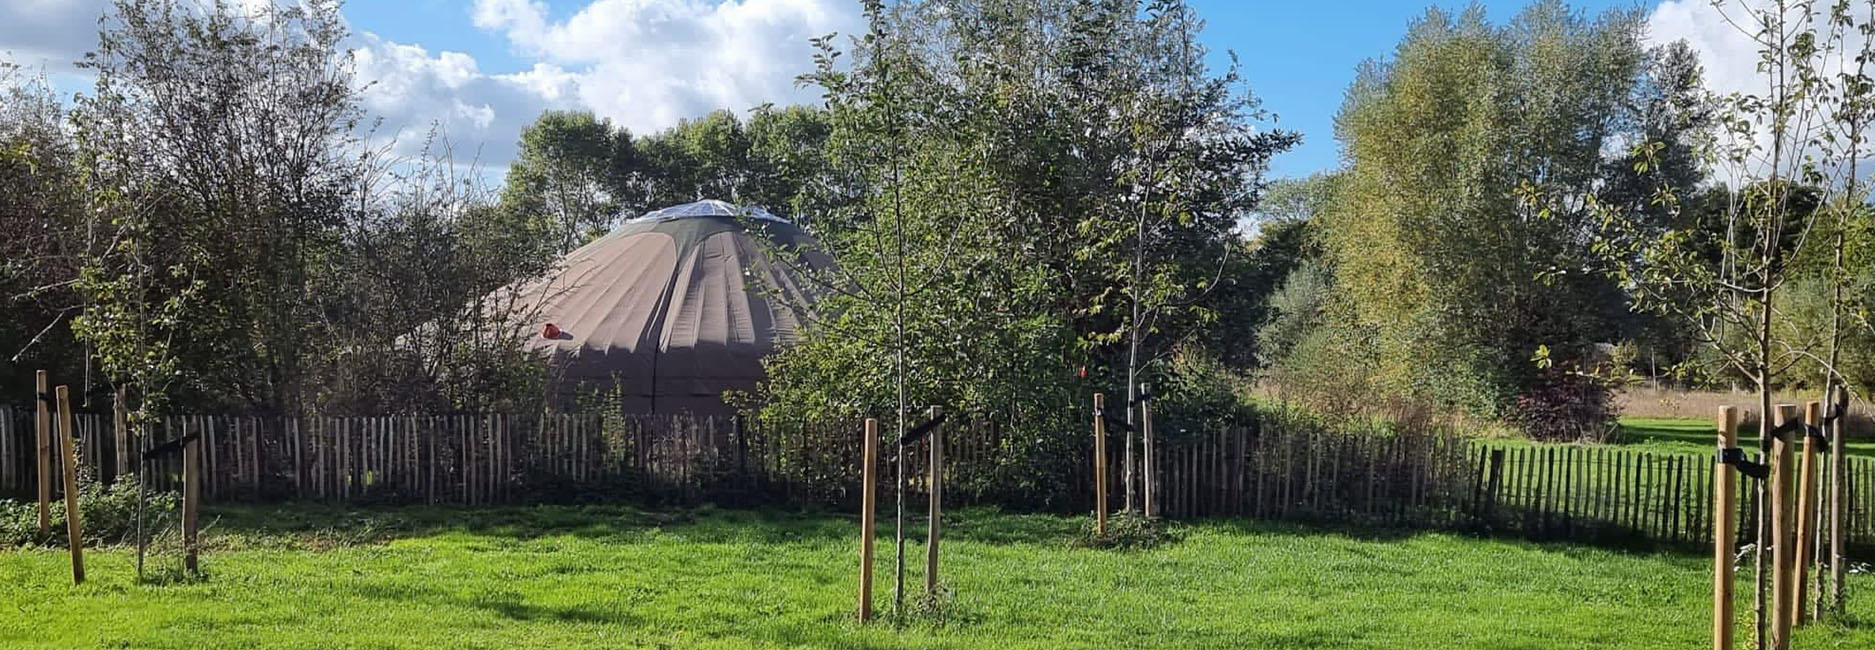 deverwondering-slider-yurt-2